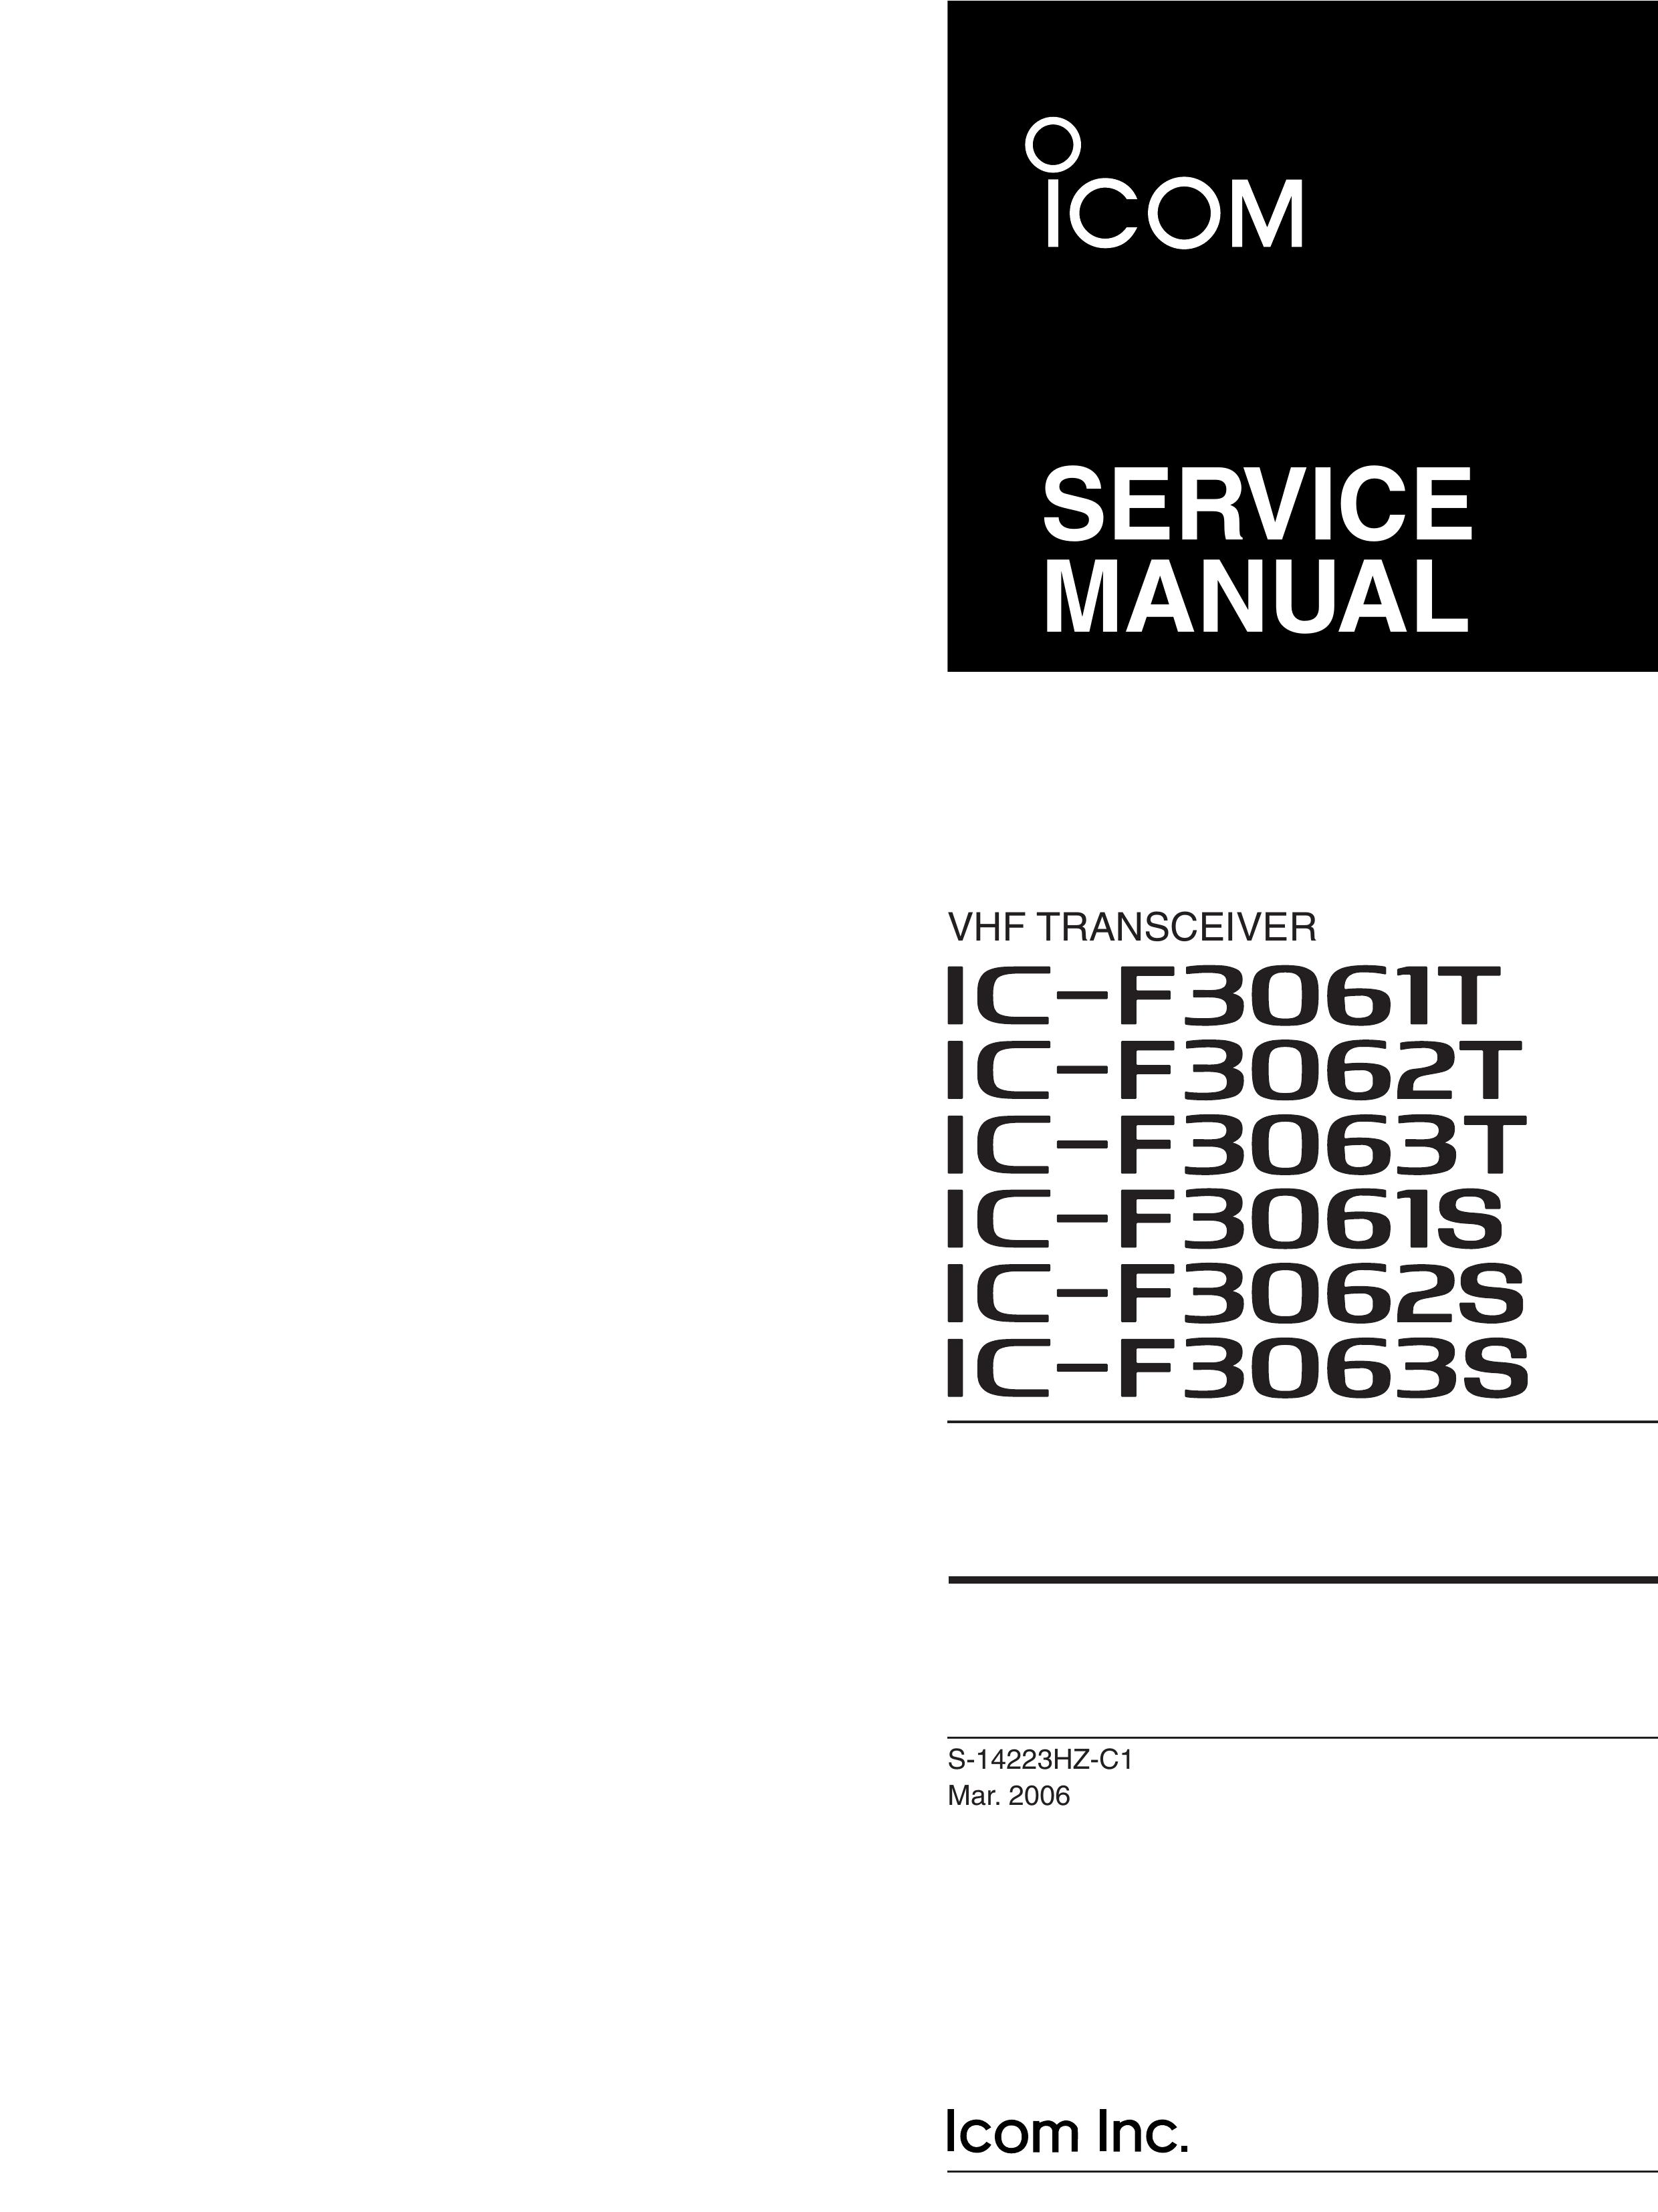 Icom IC-F3062S Marine Radio User Manual